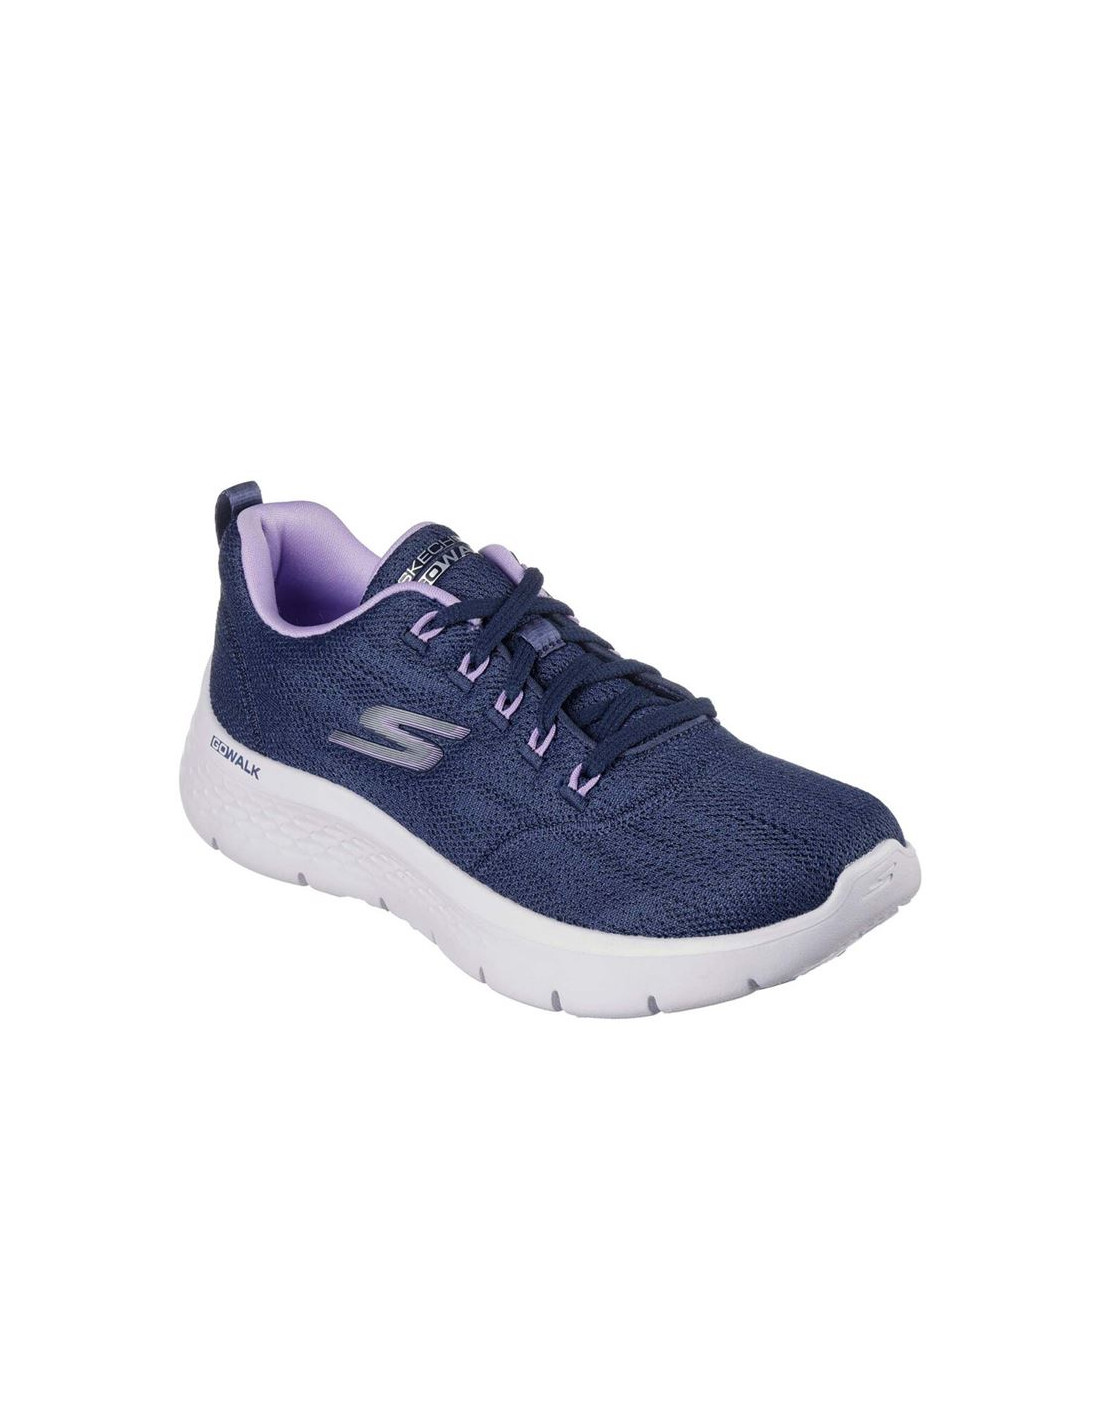 Zapatillas Skechers Go Walk Flex - Strik Mujer Navy Textile/Lavender Trim